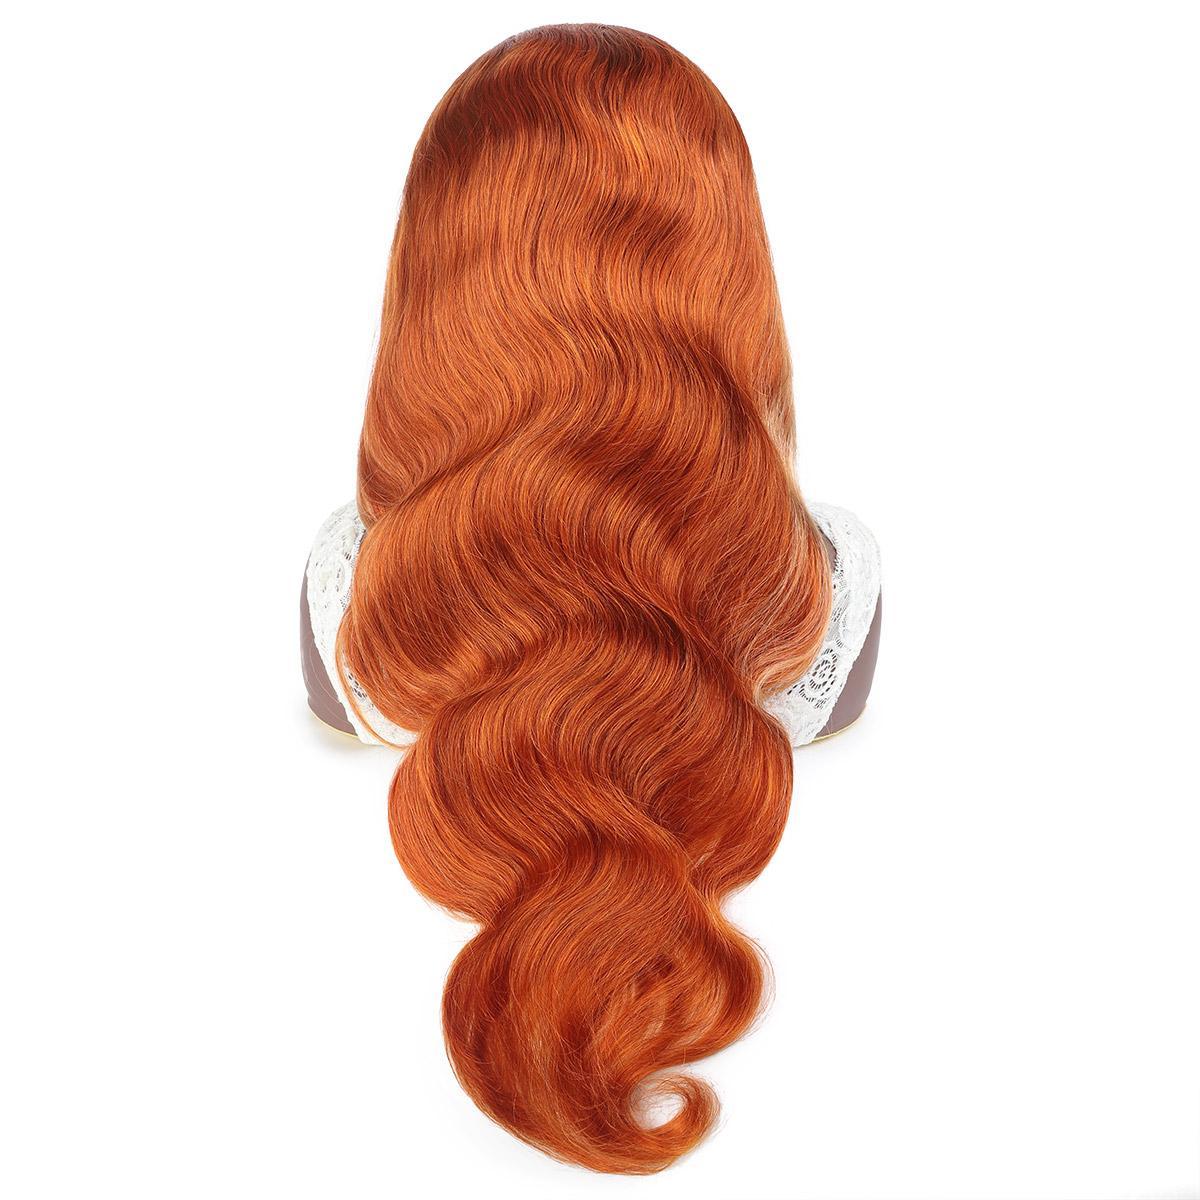 Emma Ginger Base w/ Blonde Skunk Stripe Lace Virgin Wig - BB Collections Hair